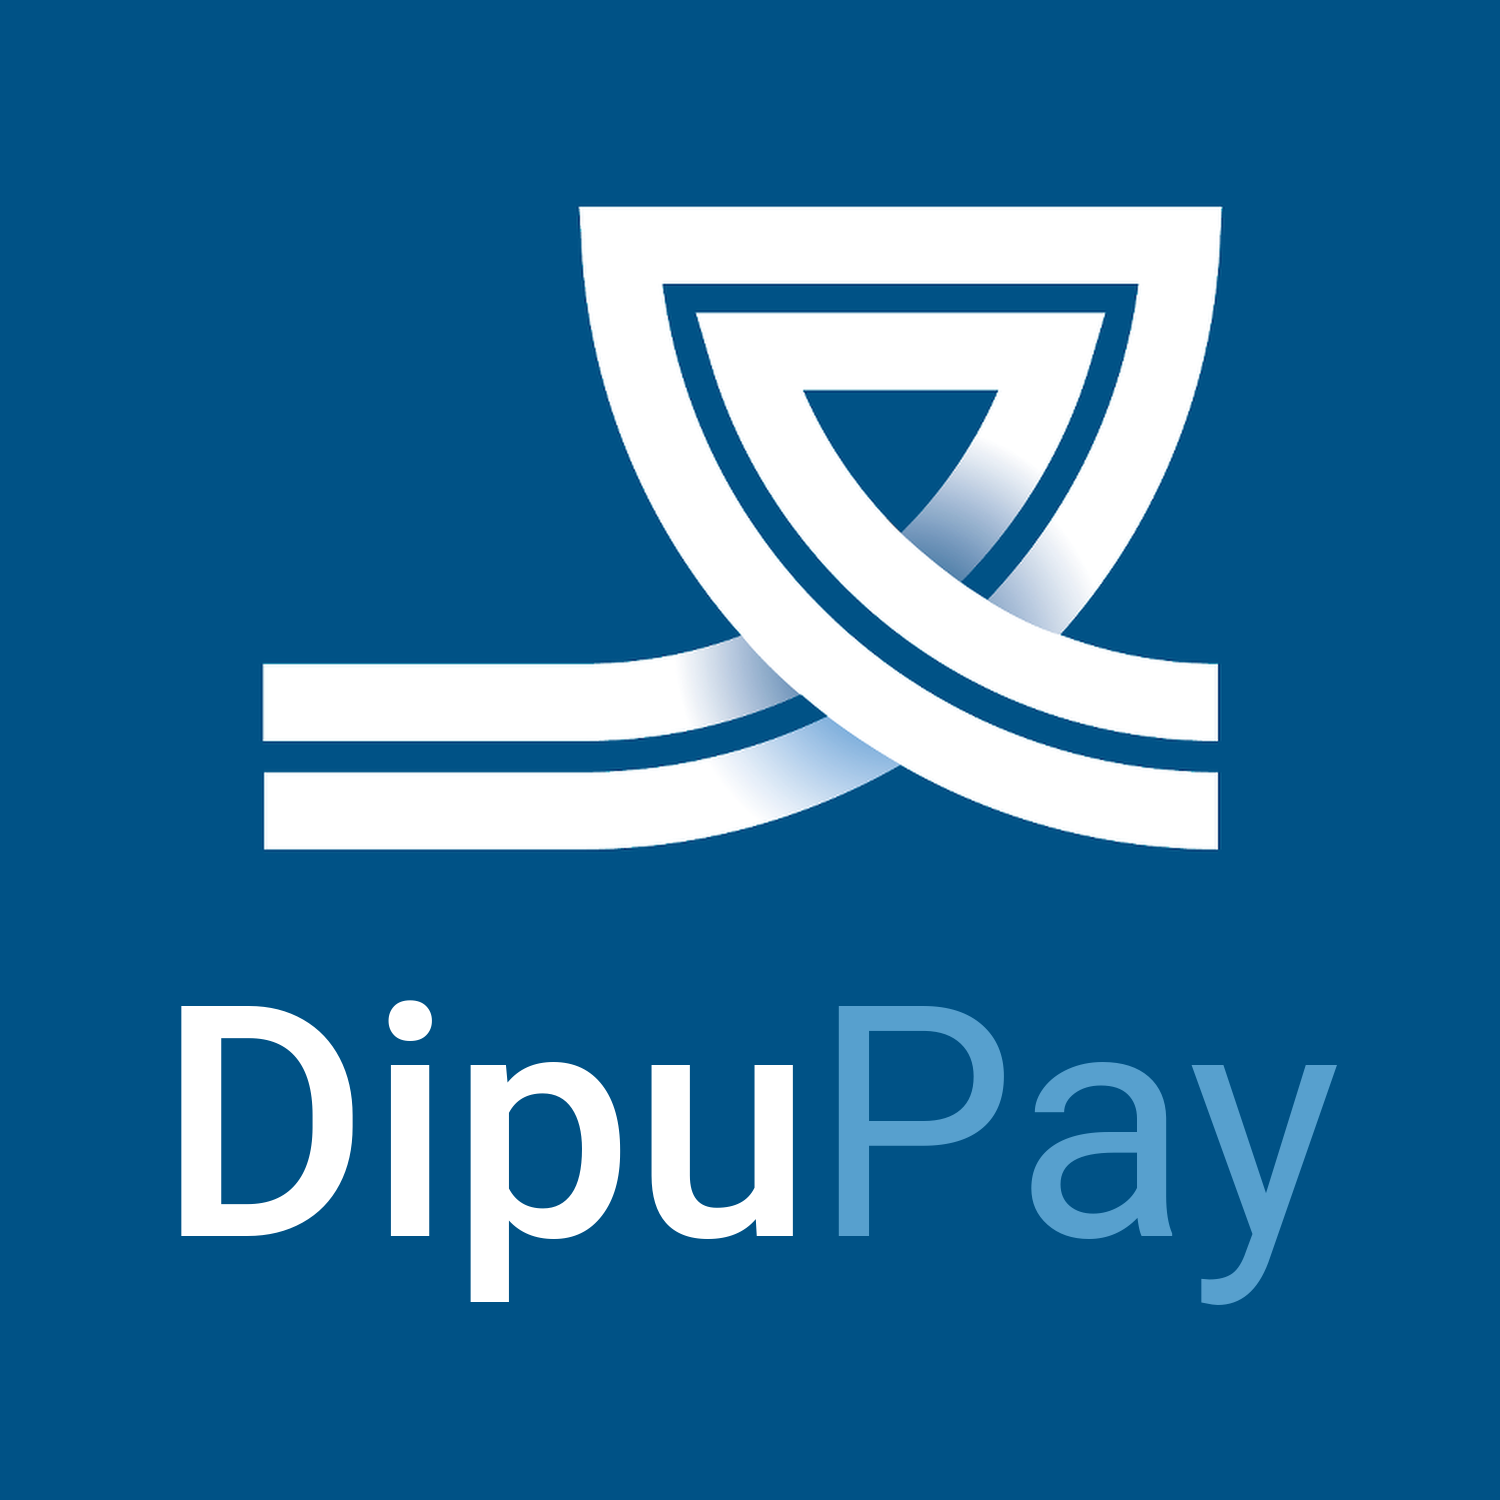 Logo de DipuPay